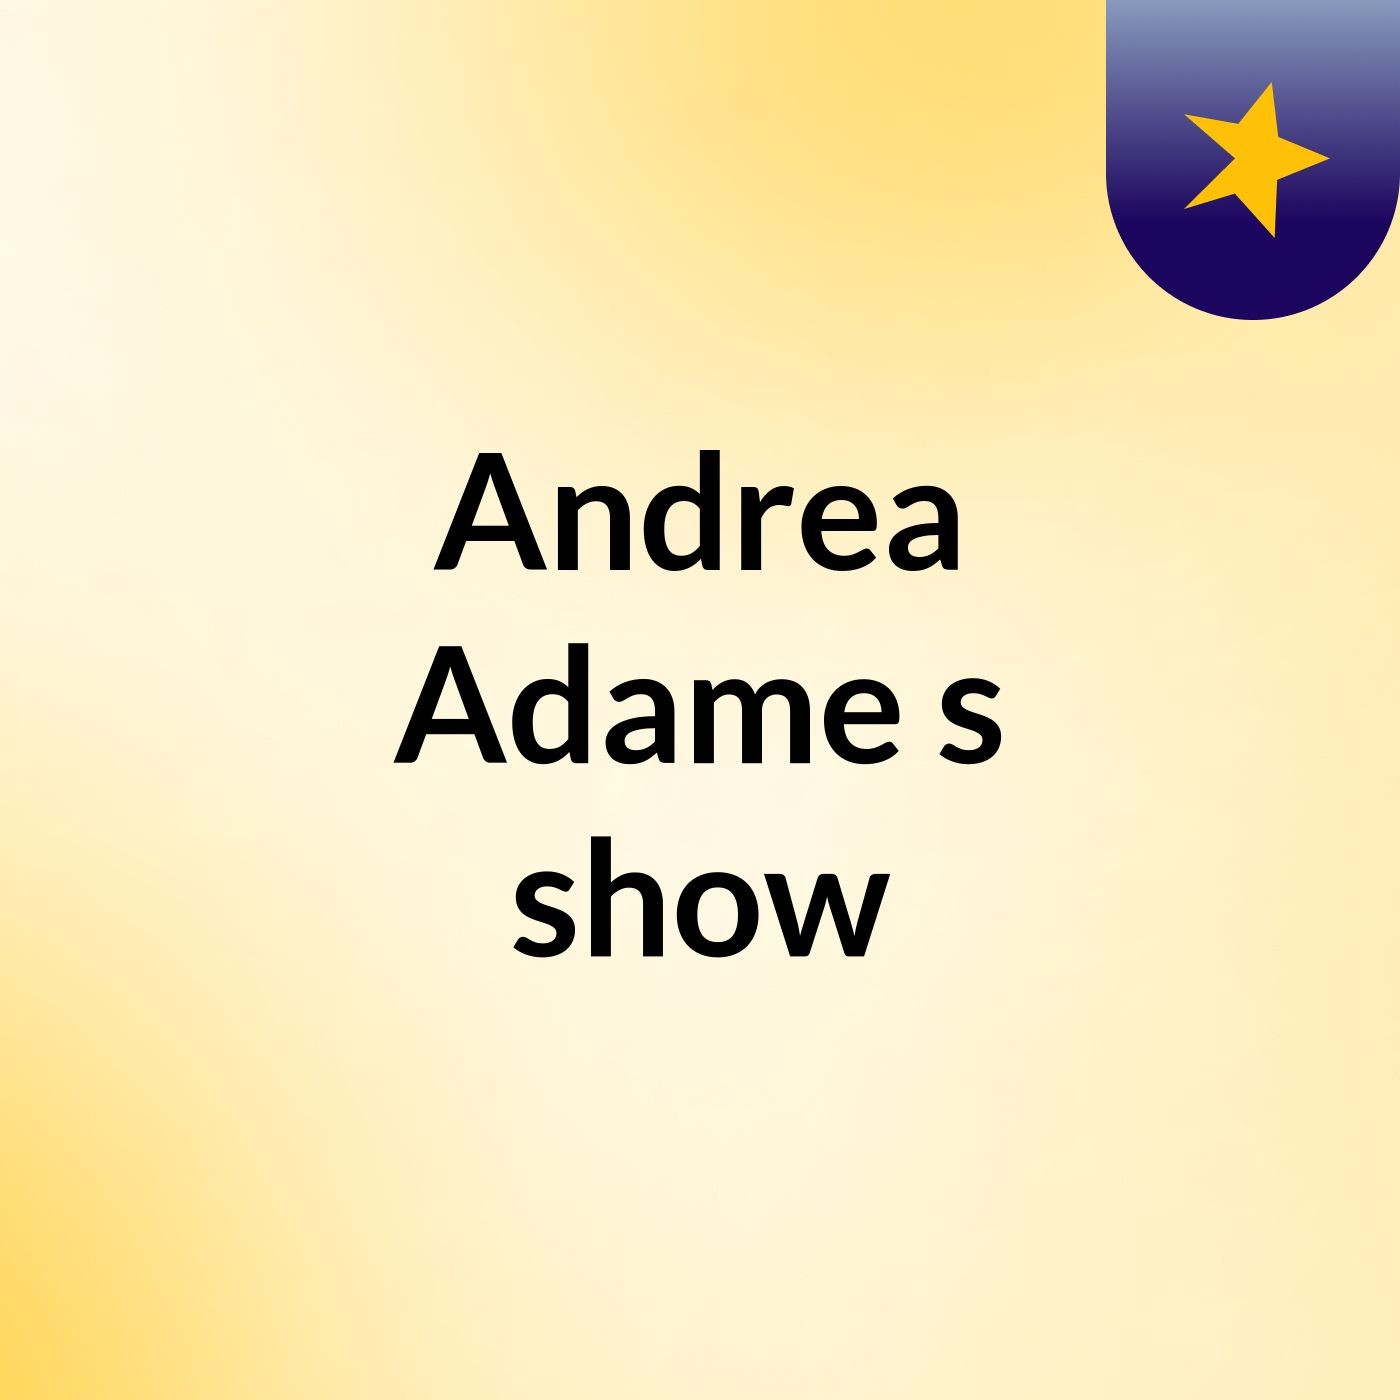 Andrea Adame's show